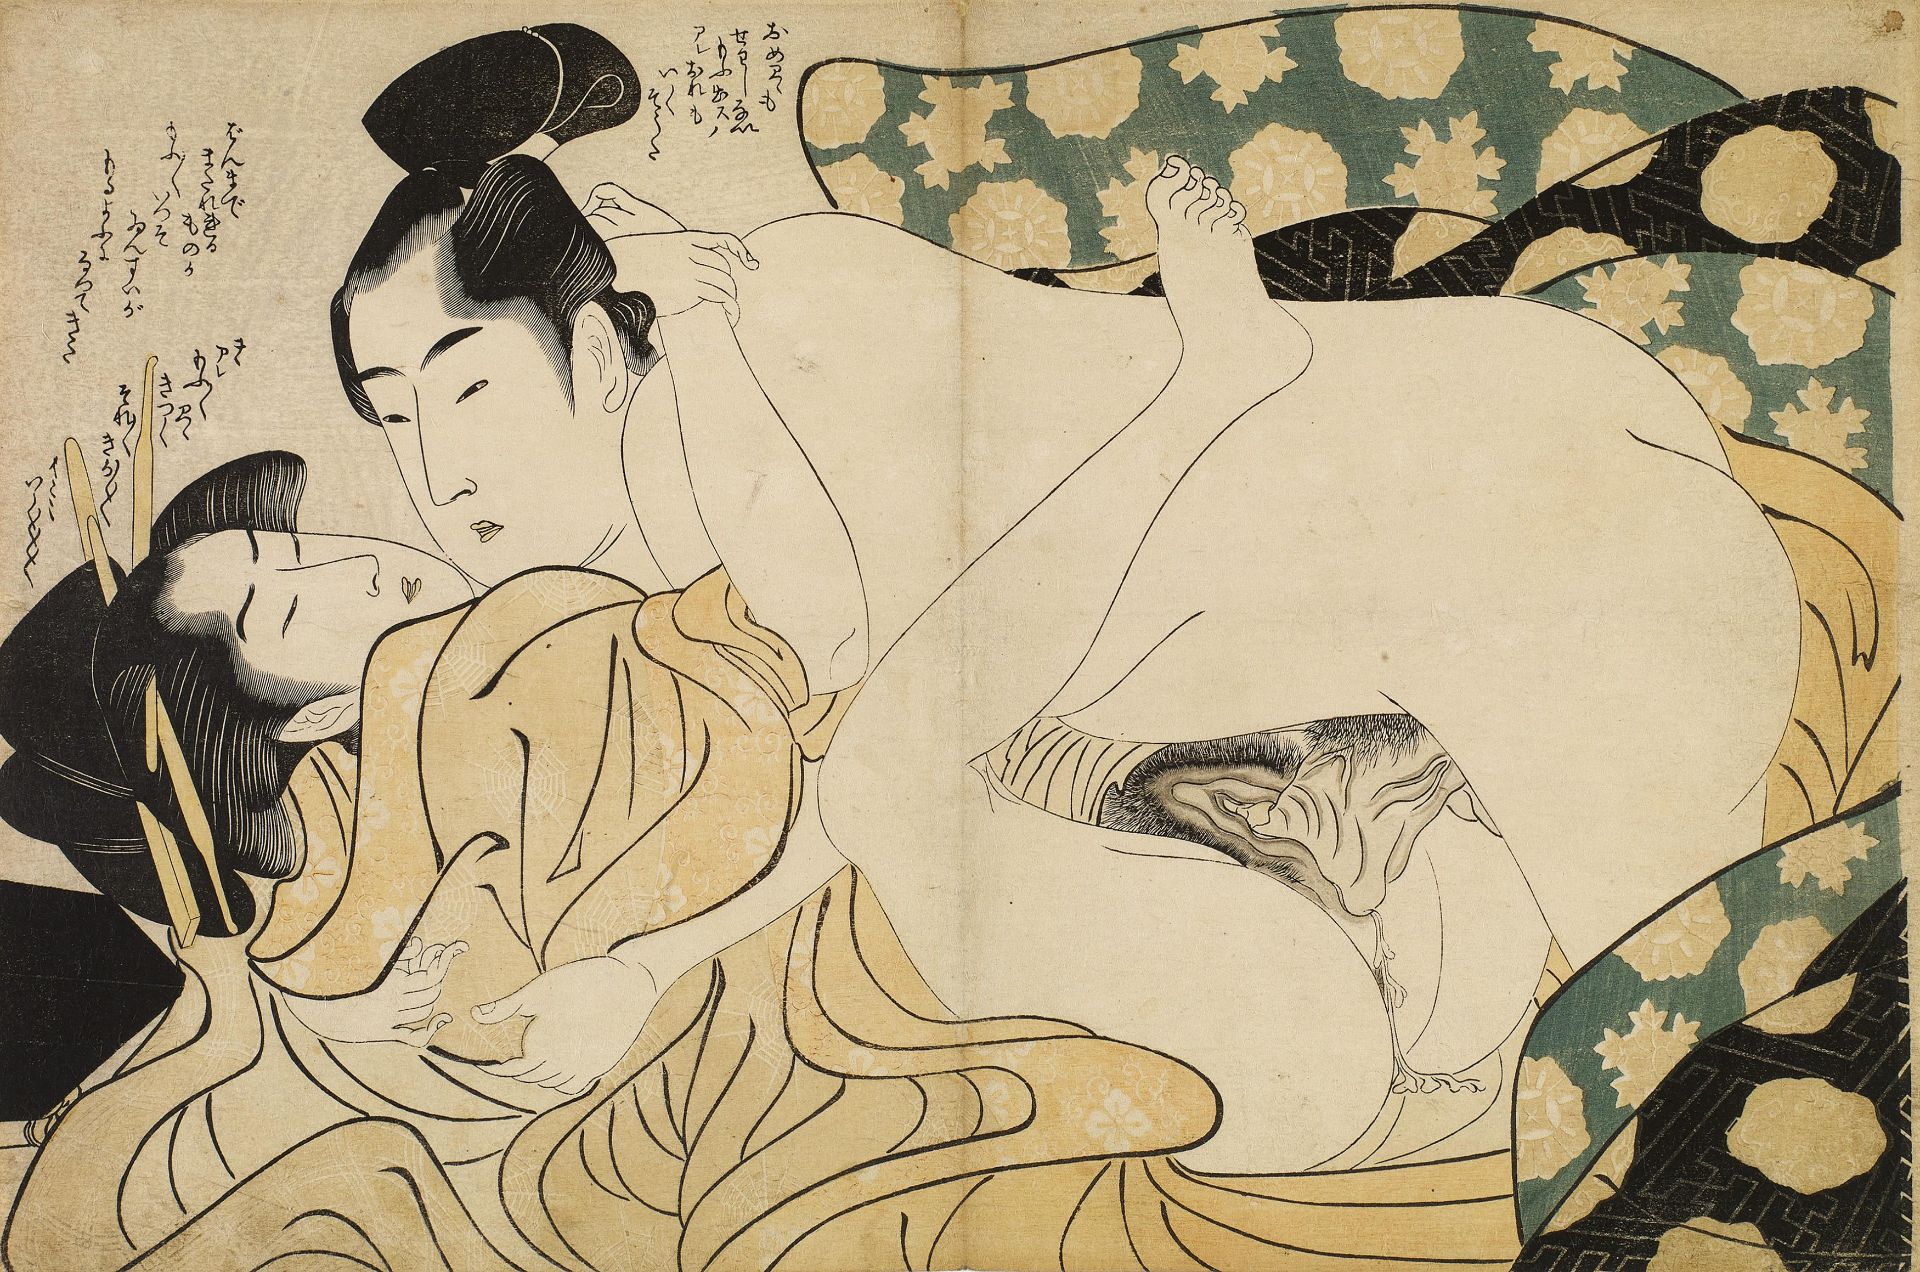 13 Blätter der Shunga-Serie "Fumi no kiyogaki" - Image 23 of 27